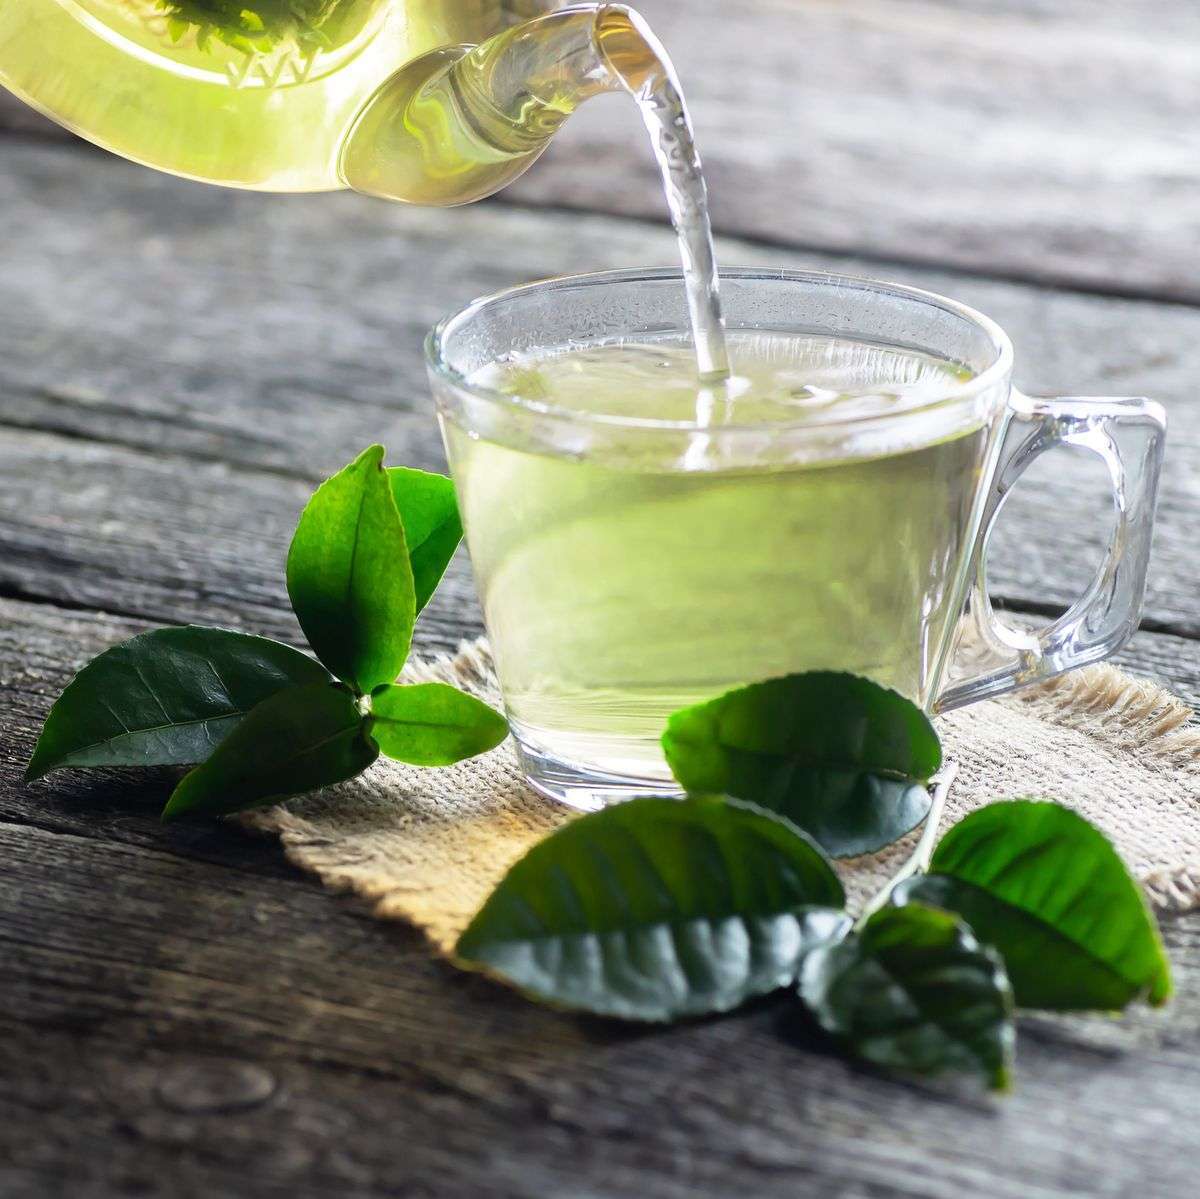 The Best Health advantages of Green Tea